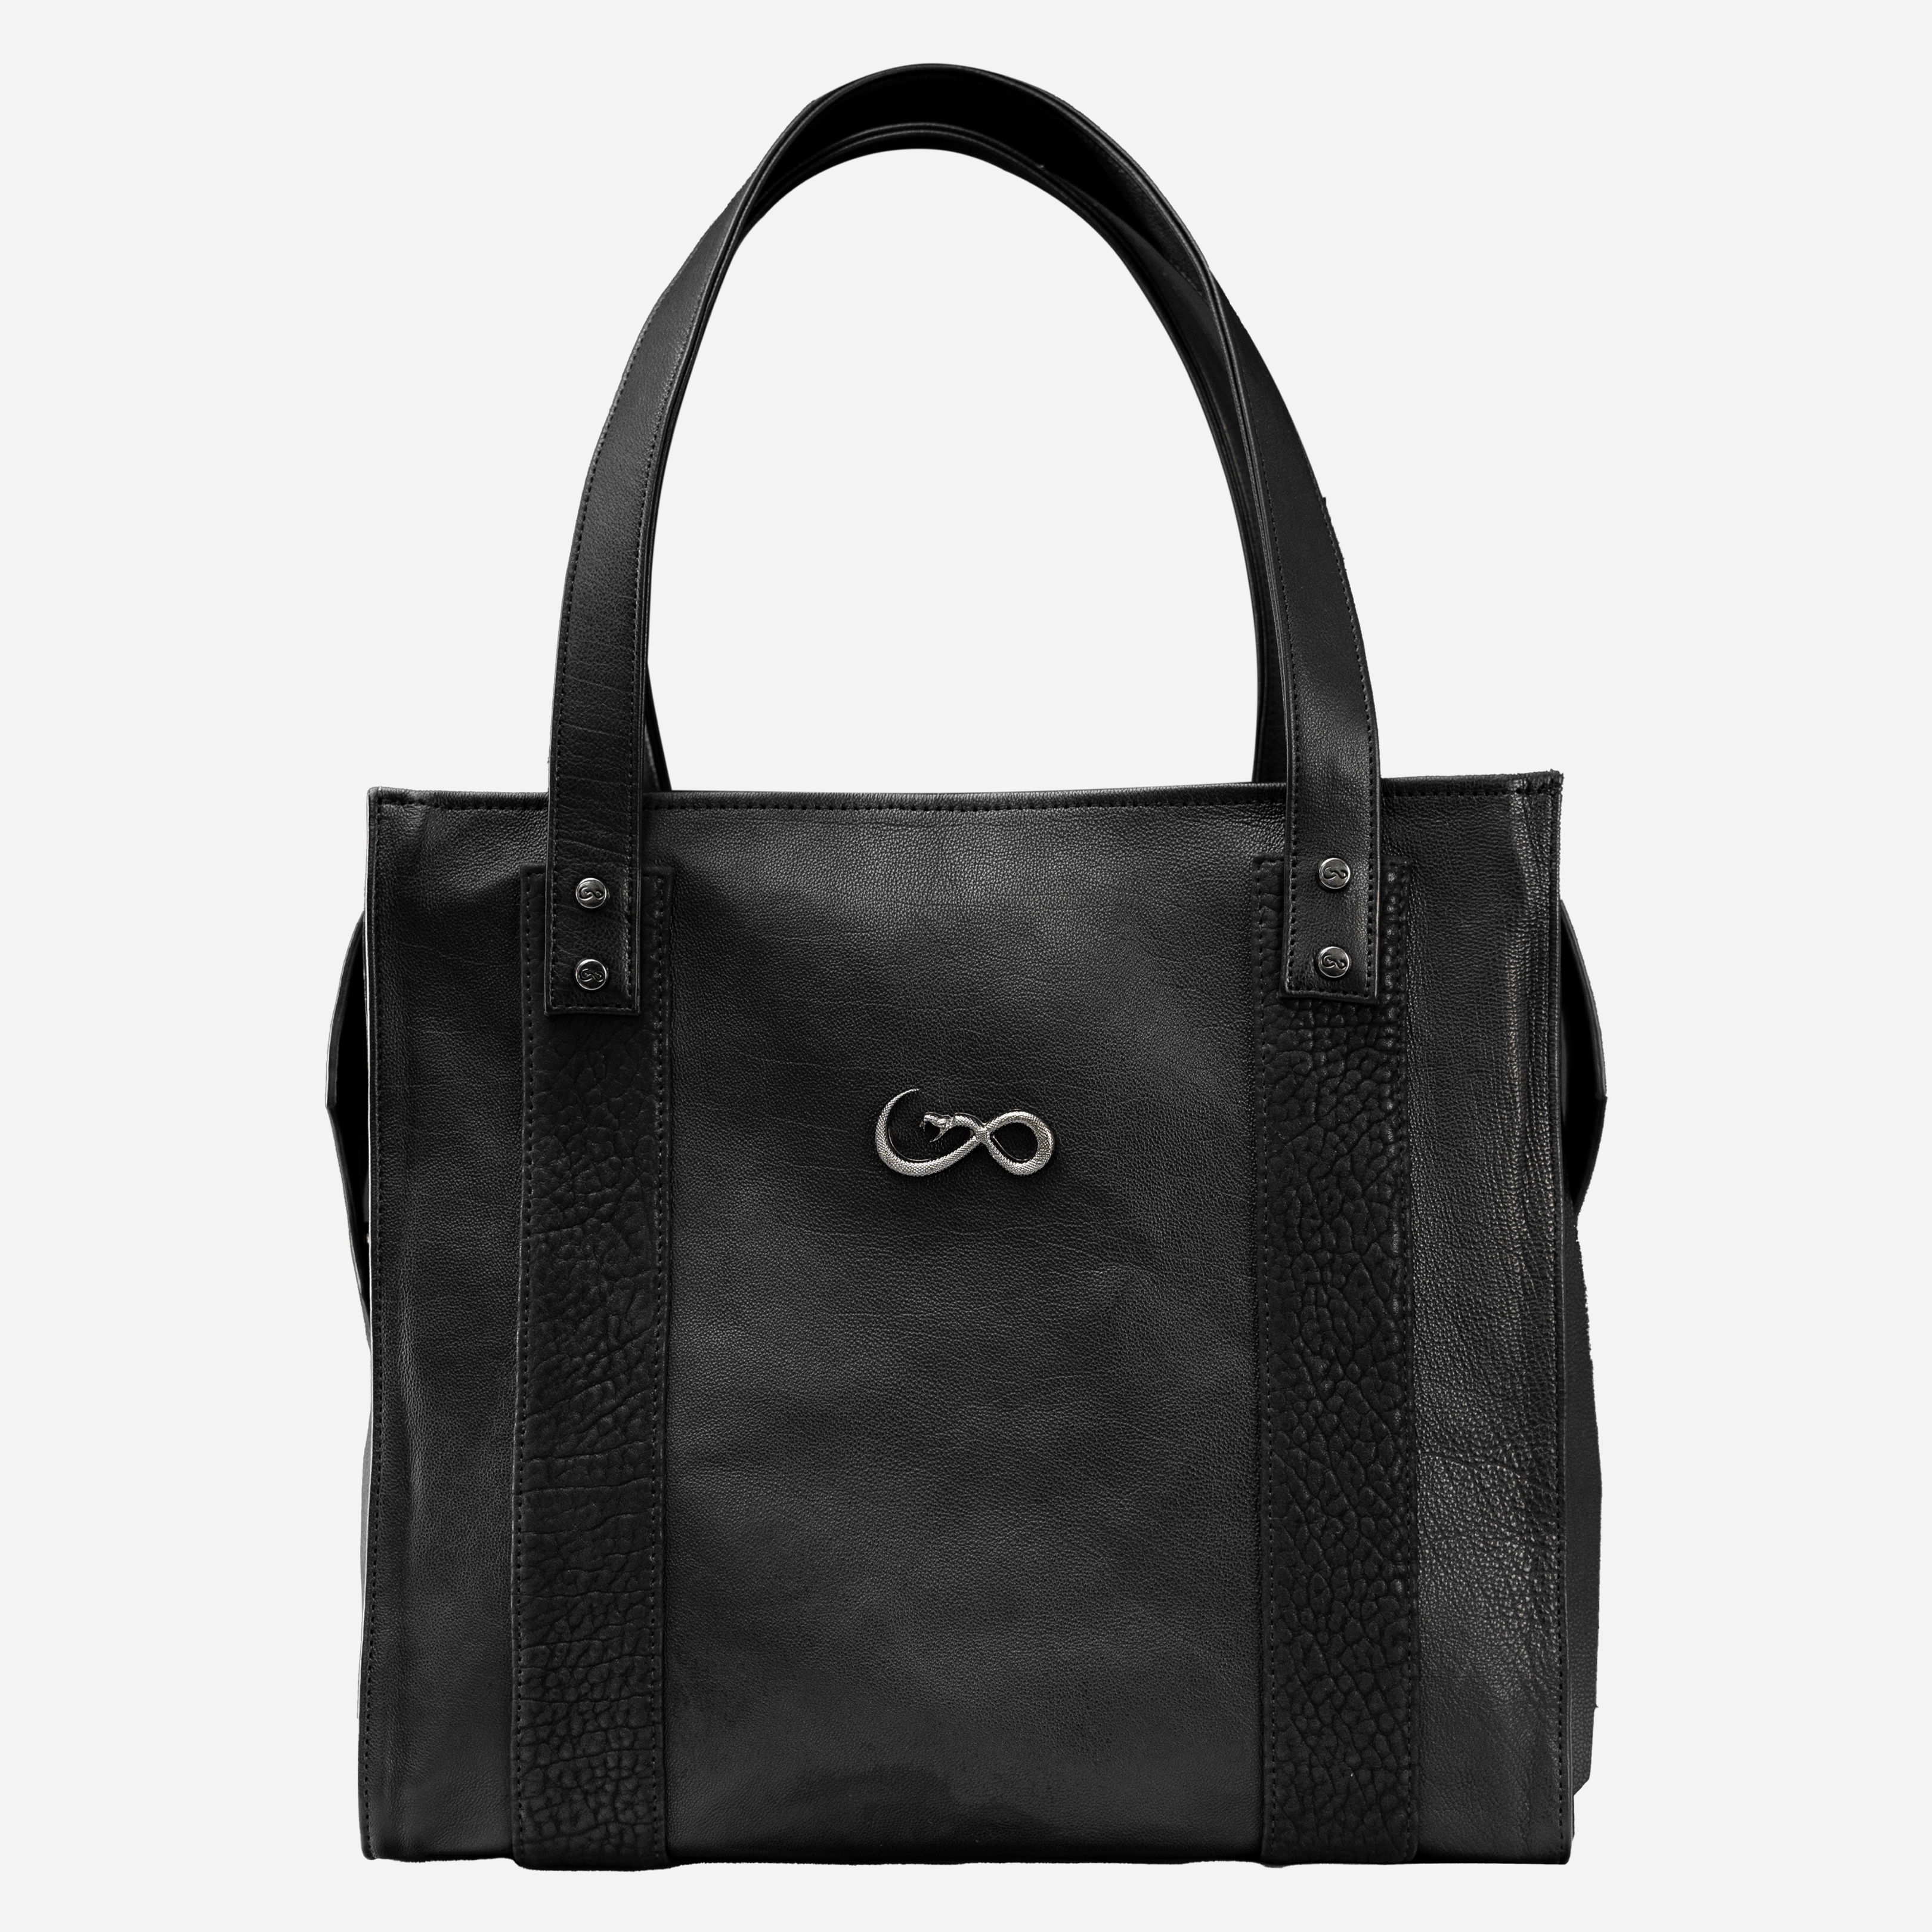 Veneno Leather Goods Tote bag - ELENA (Laptop)